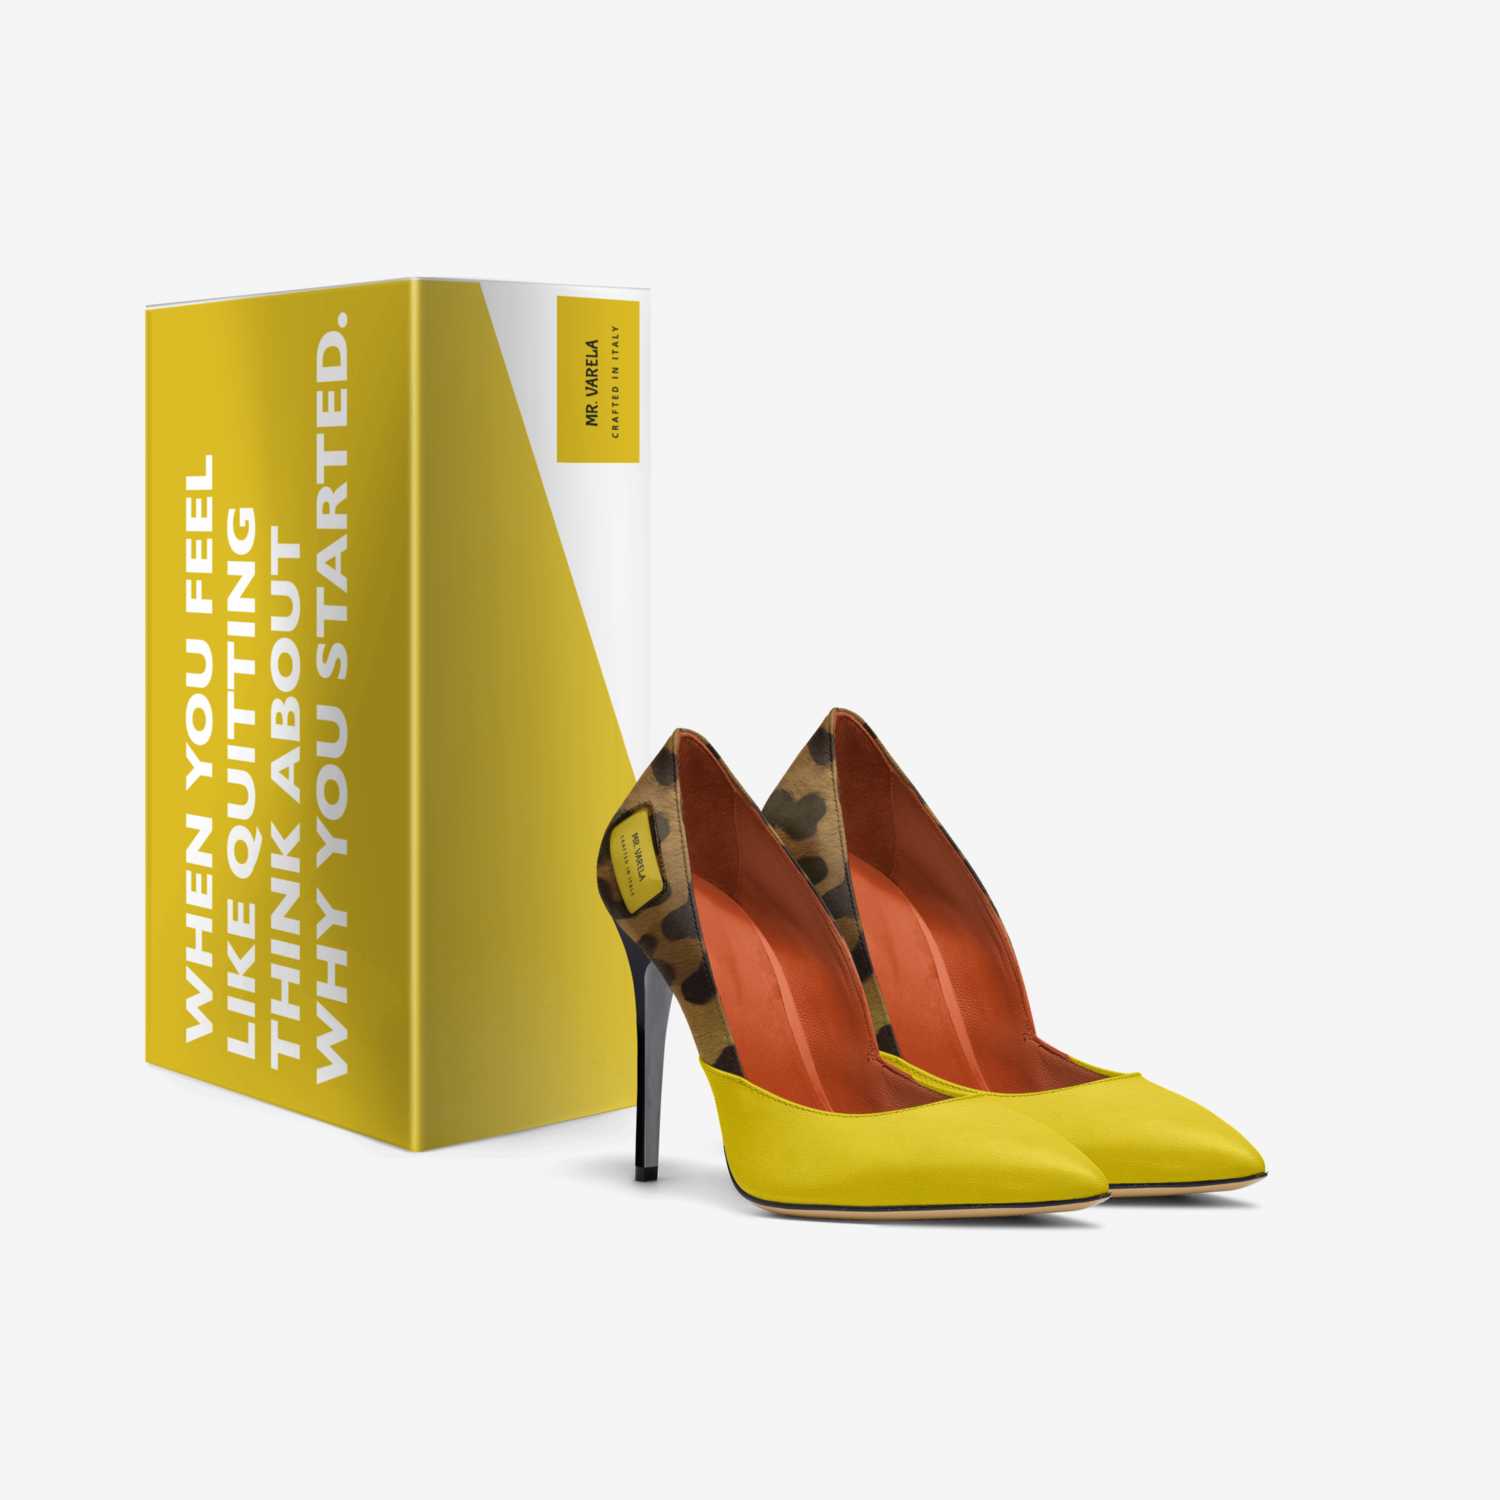 MR. VARELA  custom made in Italy shoes by Silvino Varela | Box view